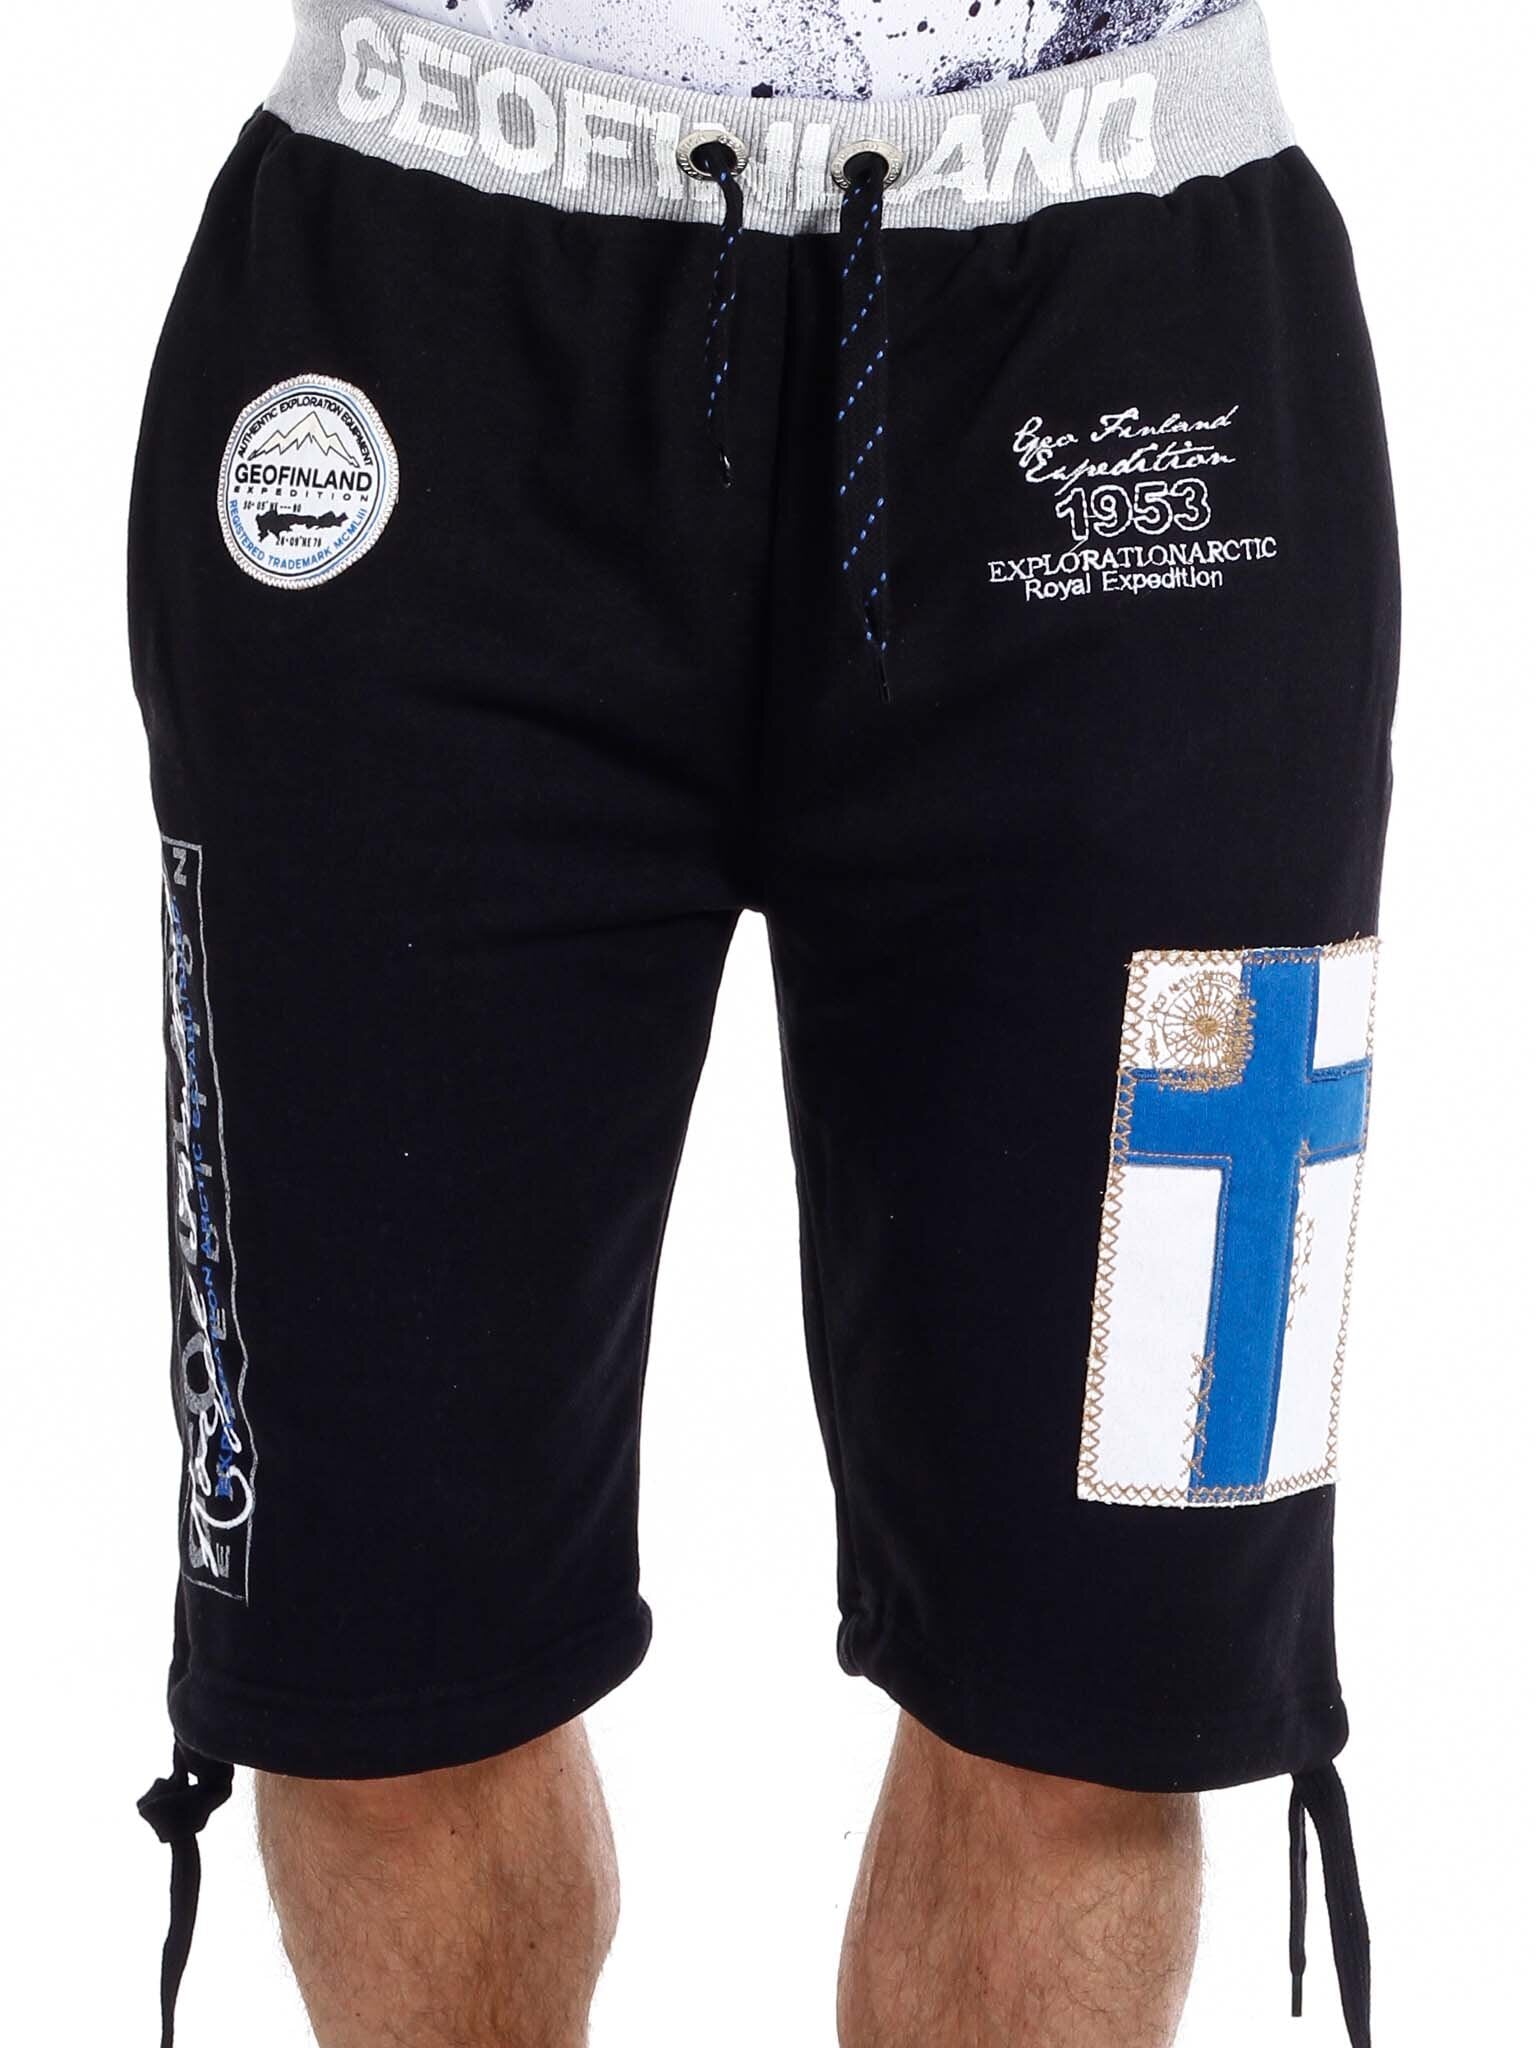 Geo Finland Bermuda Shorts - Sort